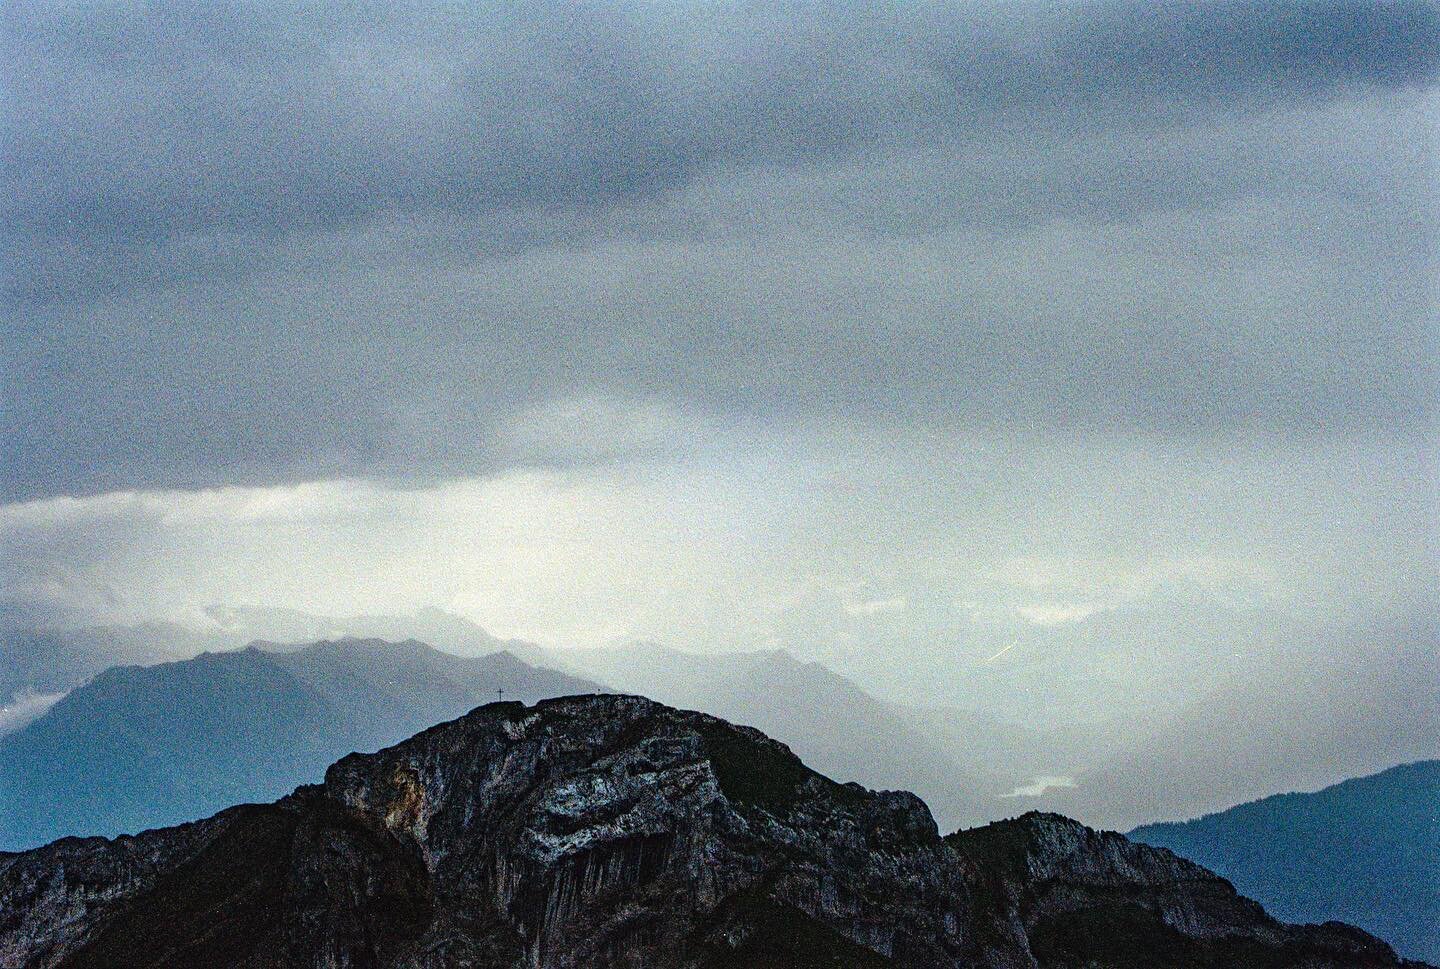 Mountains. And more rocks! 

#colorfilm #colorfilmphotography #kodakportra #kodakportra400 #longlivefilm #nikomat #nikomatft #pilatus #mountpilatus #switzerland #geology #orogeny #alps #swissalps #swissvista #mountainvista #rocks #mountainrocks